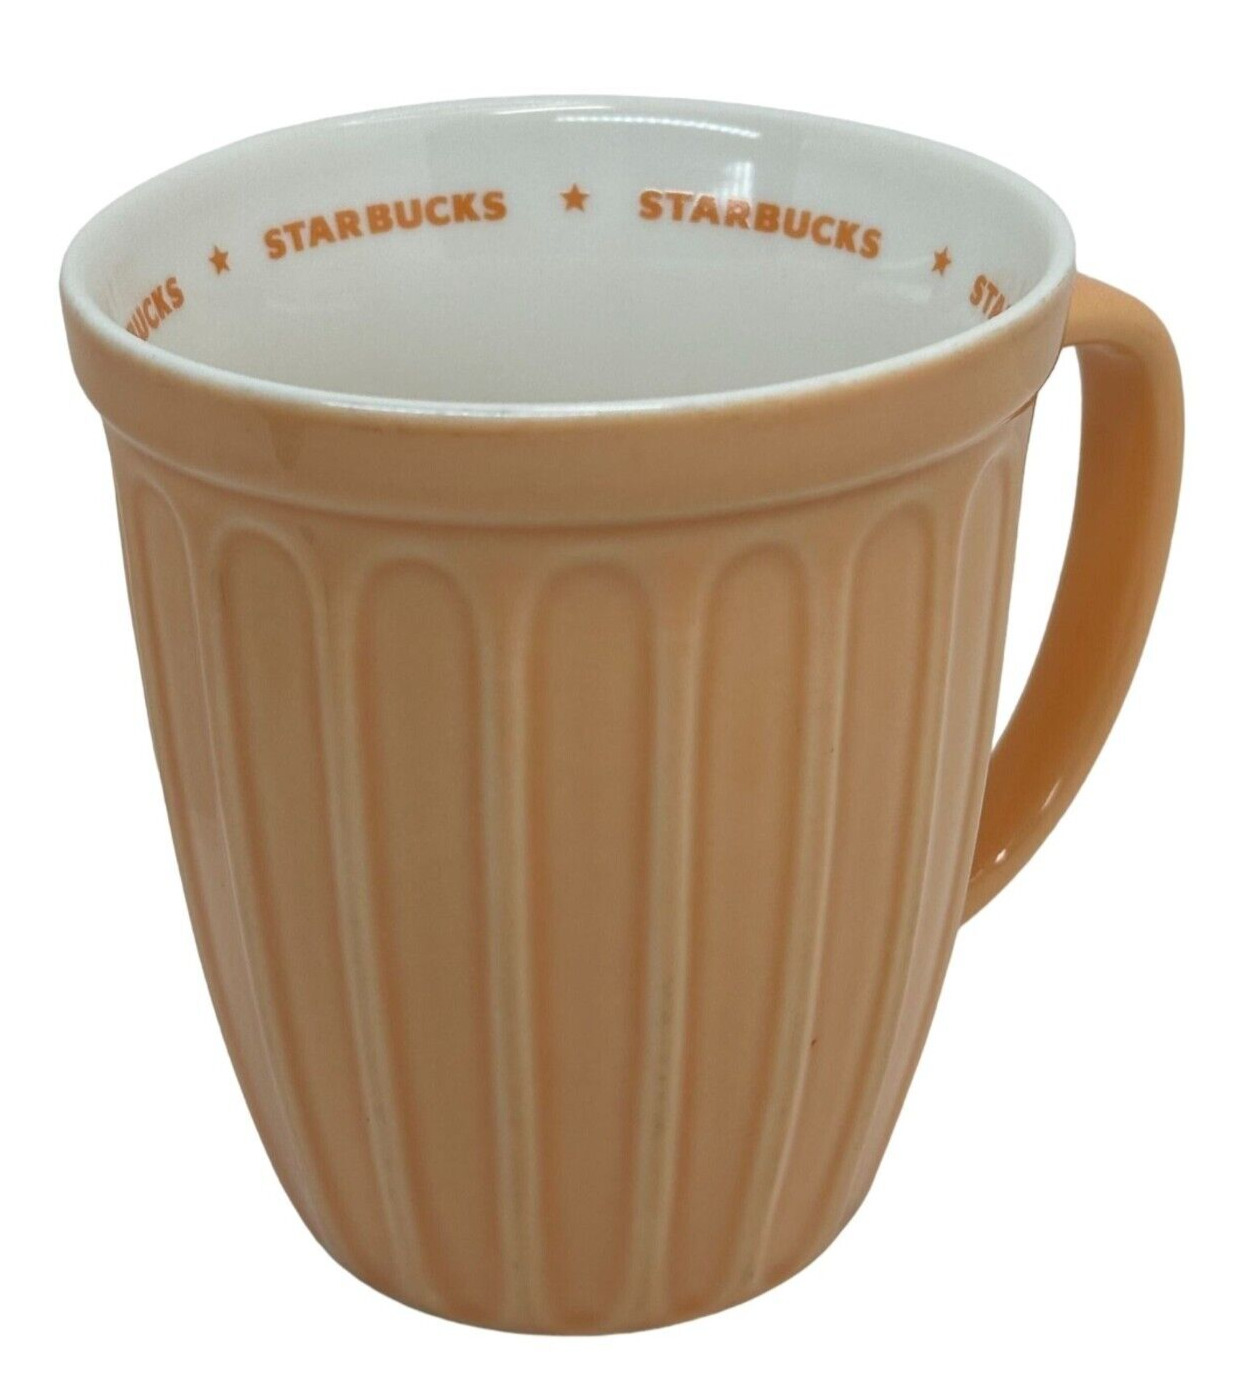 Starbucks Ice Cream Peach Orange Ribbed Fluted Ceramic Coffee Mug Cup 16 oz